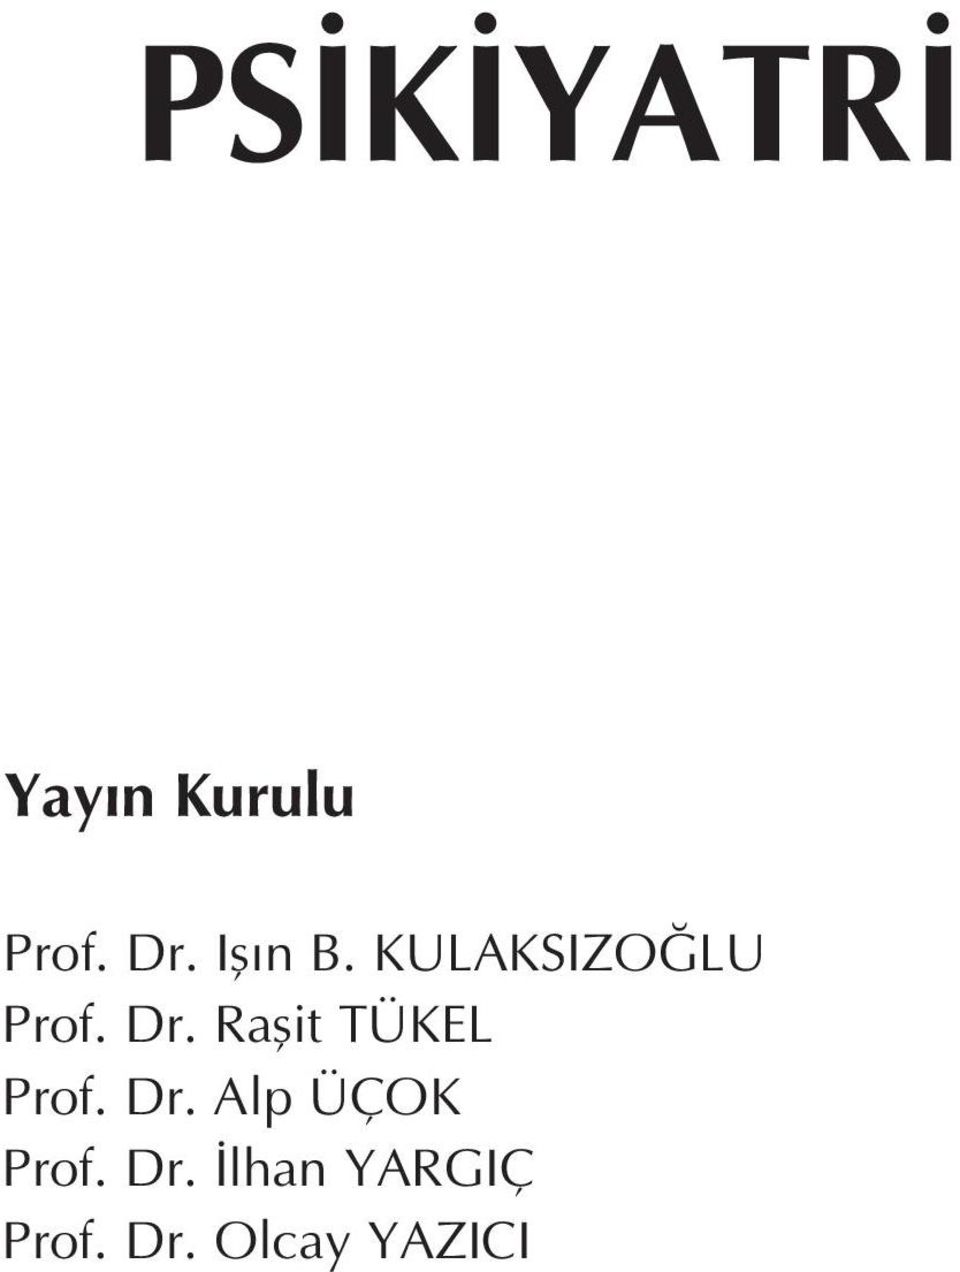 Raflit TÜKEL Prof. Dr.